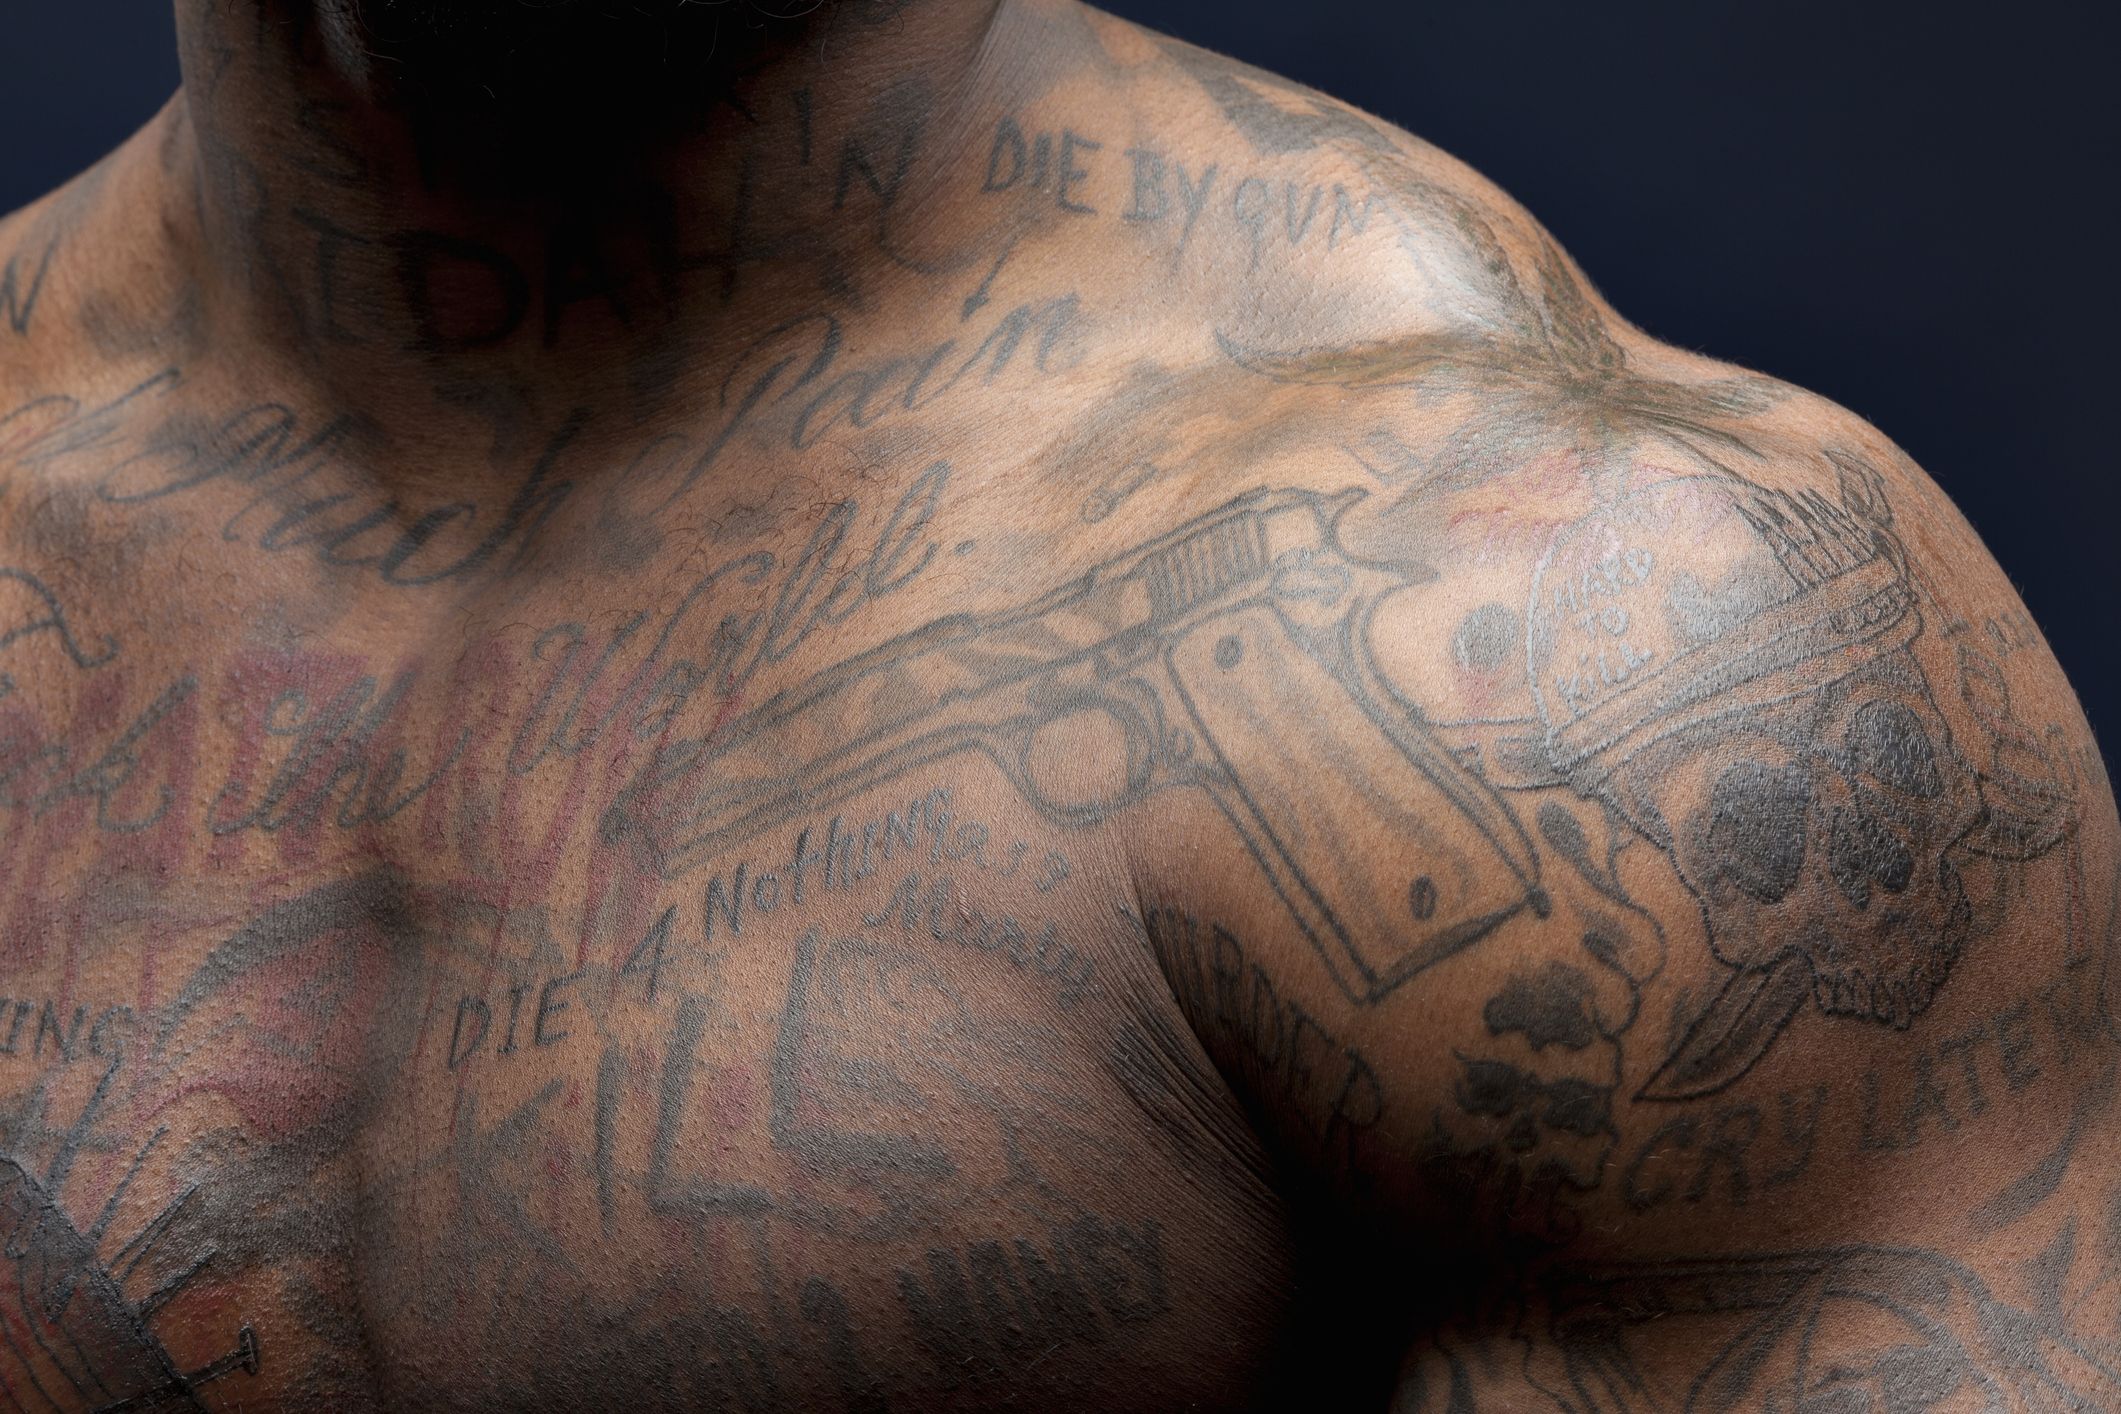 Tattoos for Dark Skin - Experts Weigh In On Tattoo Myths for Darker Skin